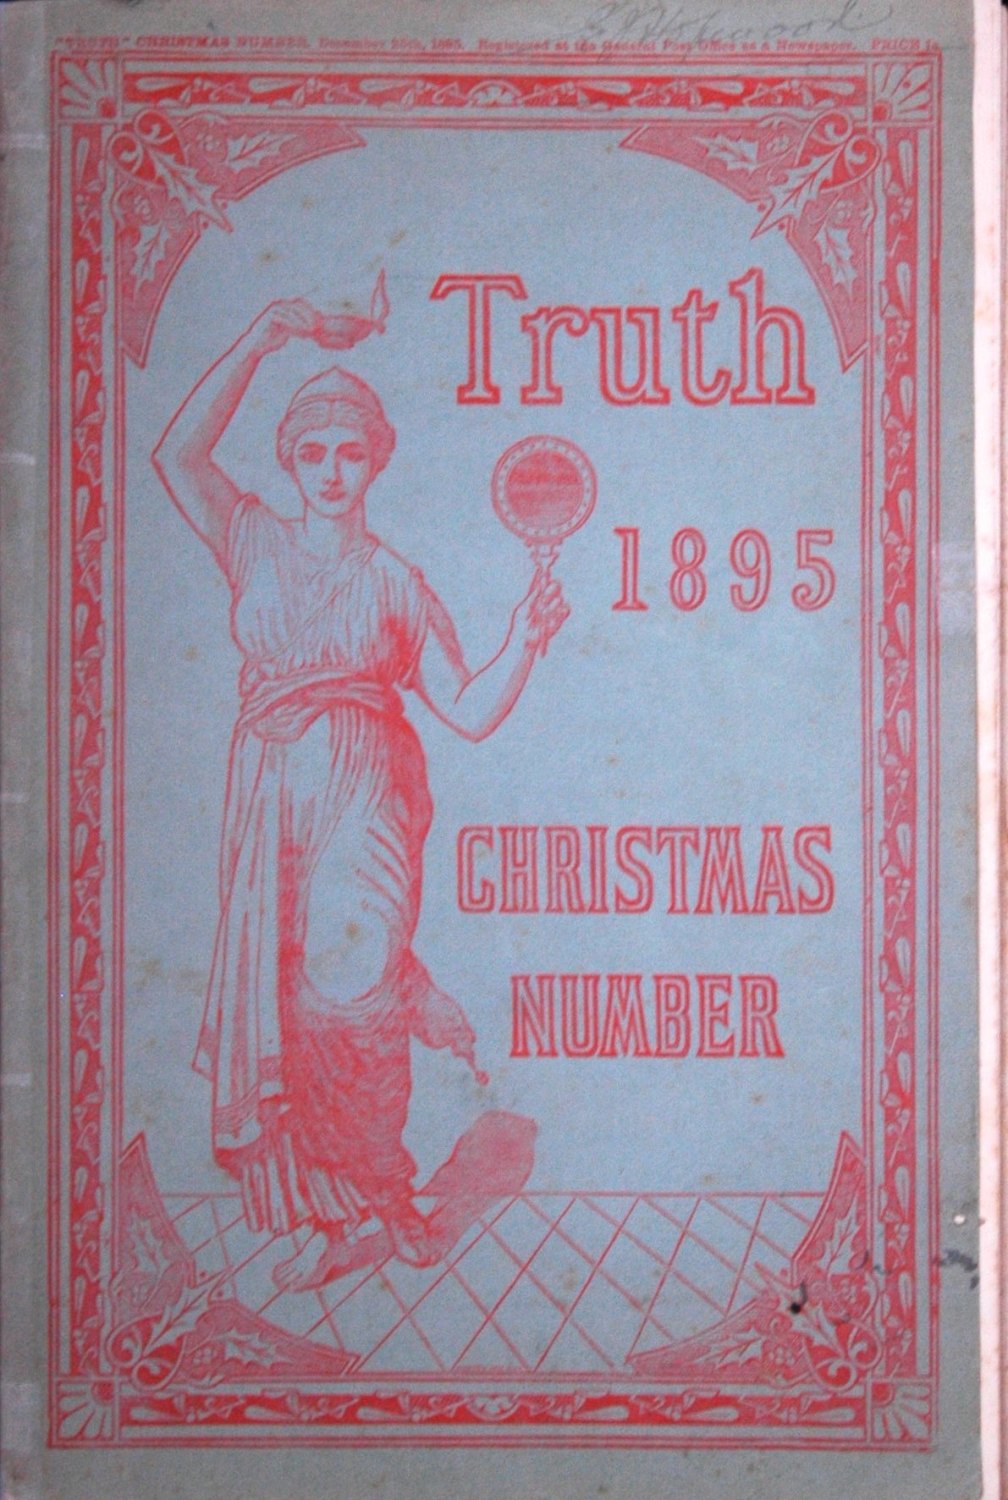 Truth Magazine 1895 Christmas Number.